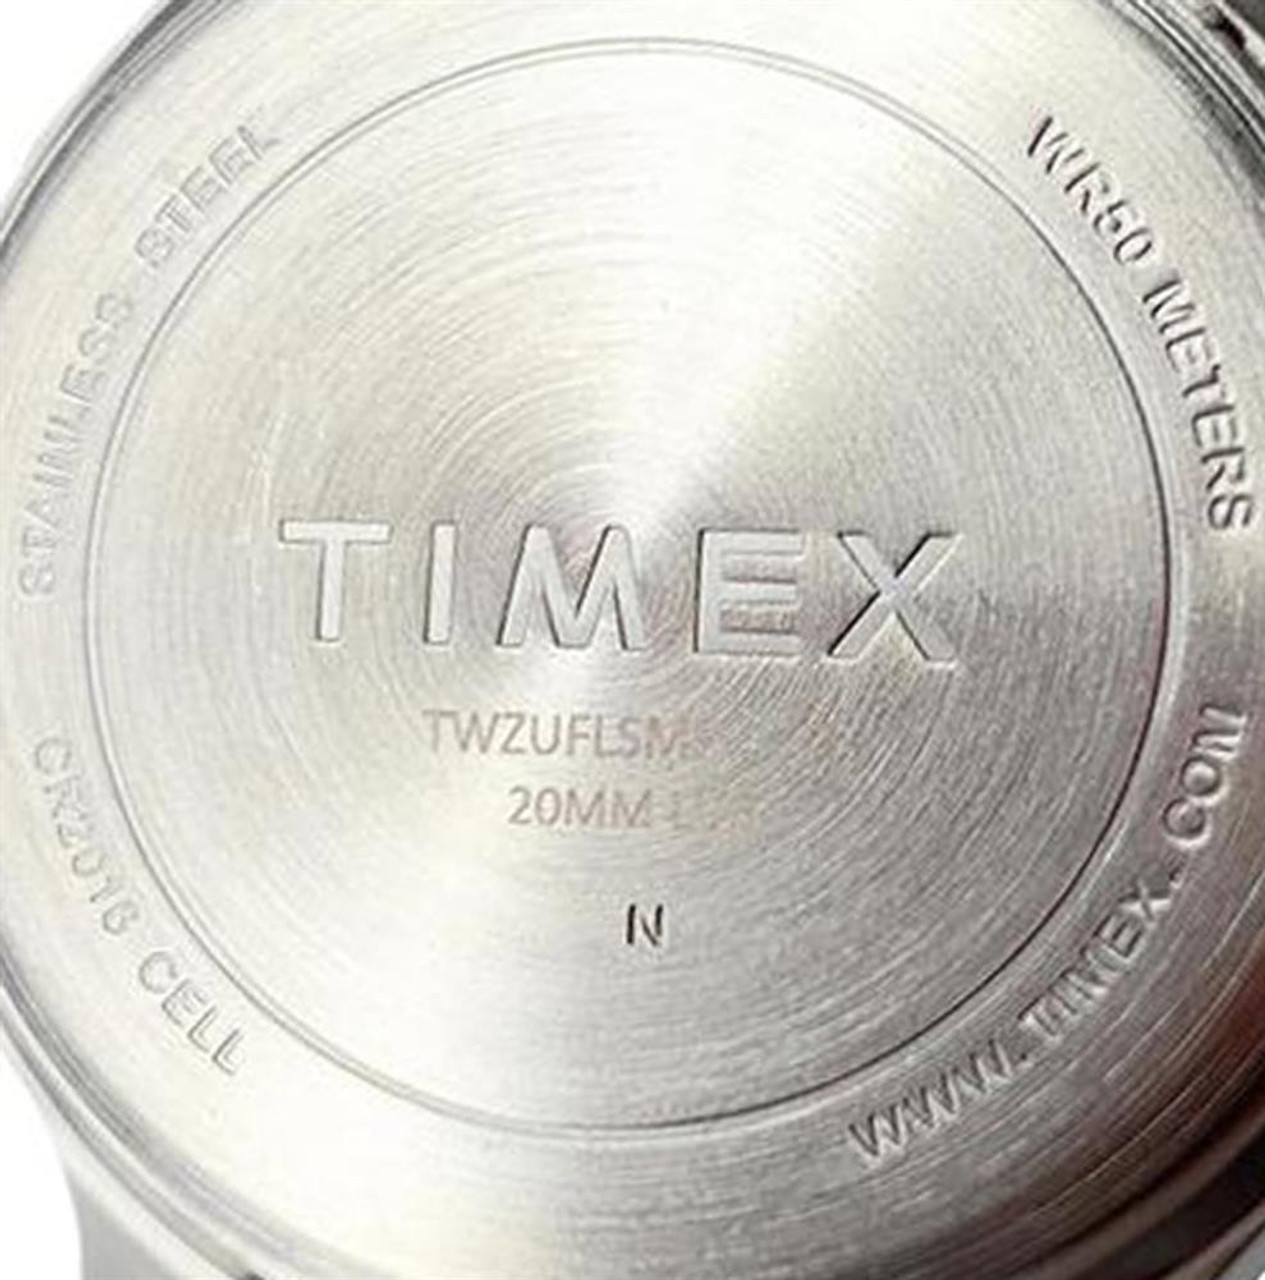 Calgary Flames Watch, Timex Citation NHL Watch Tribute